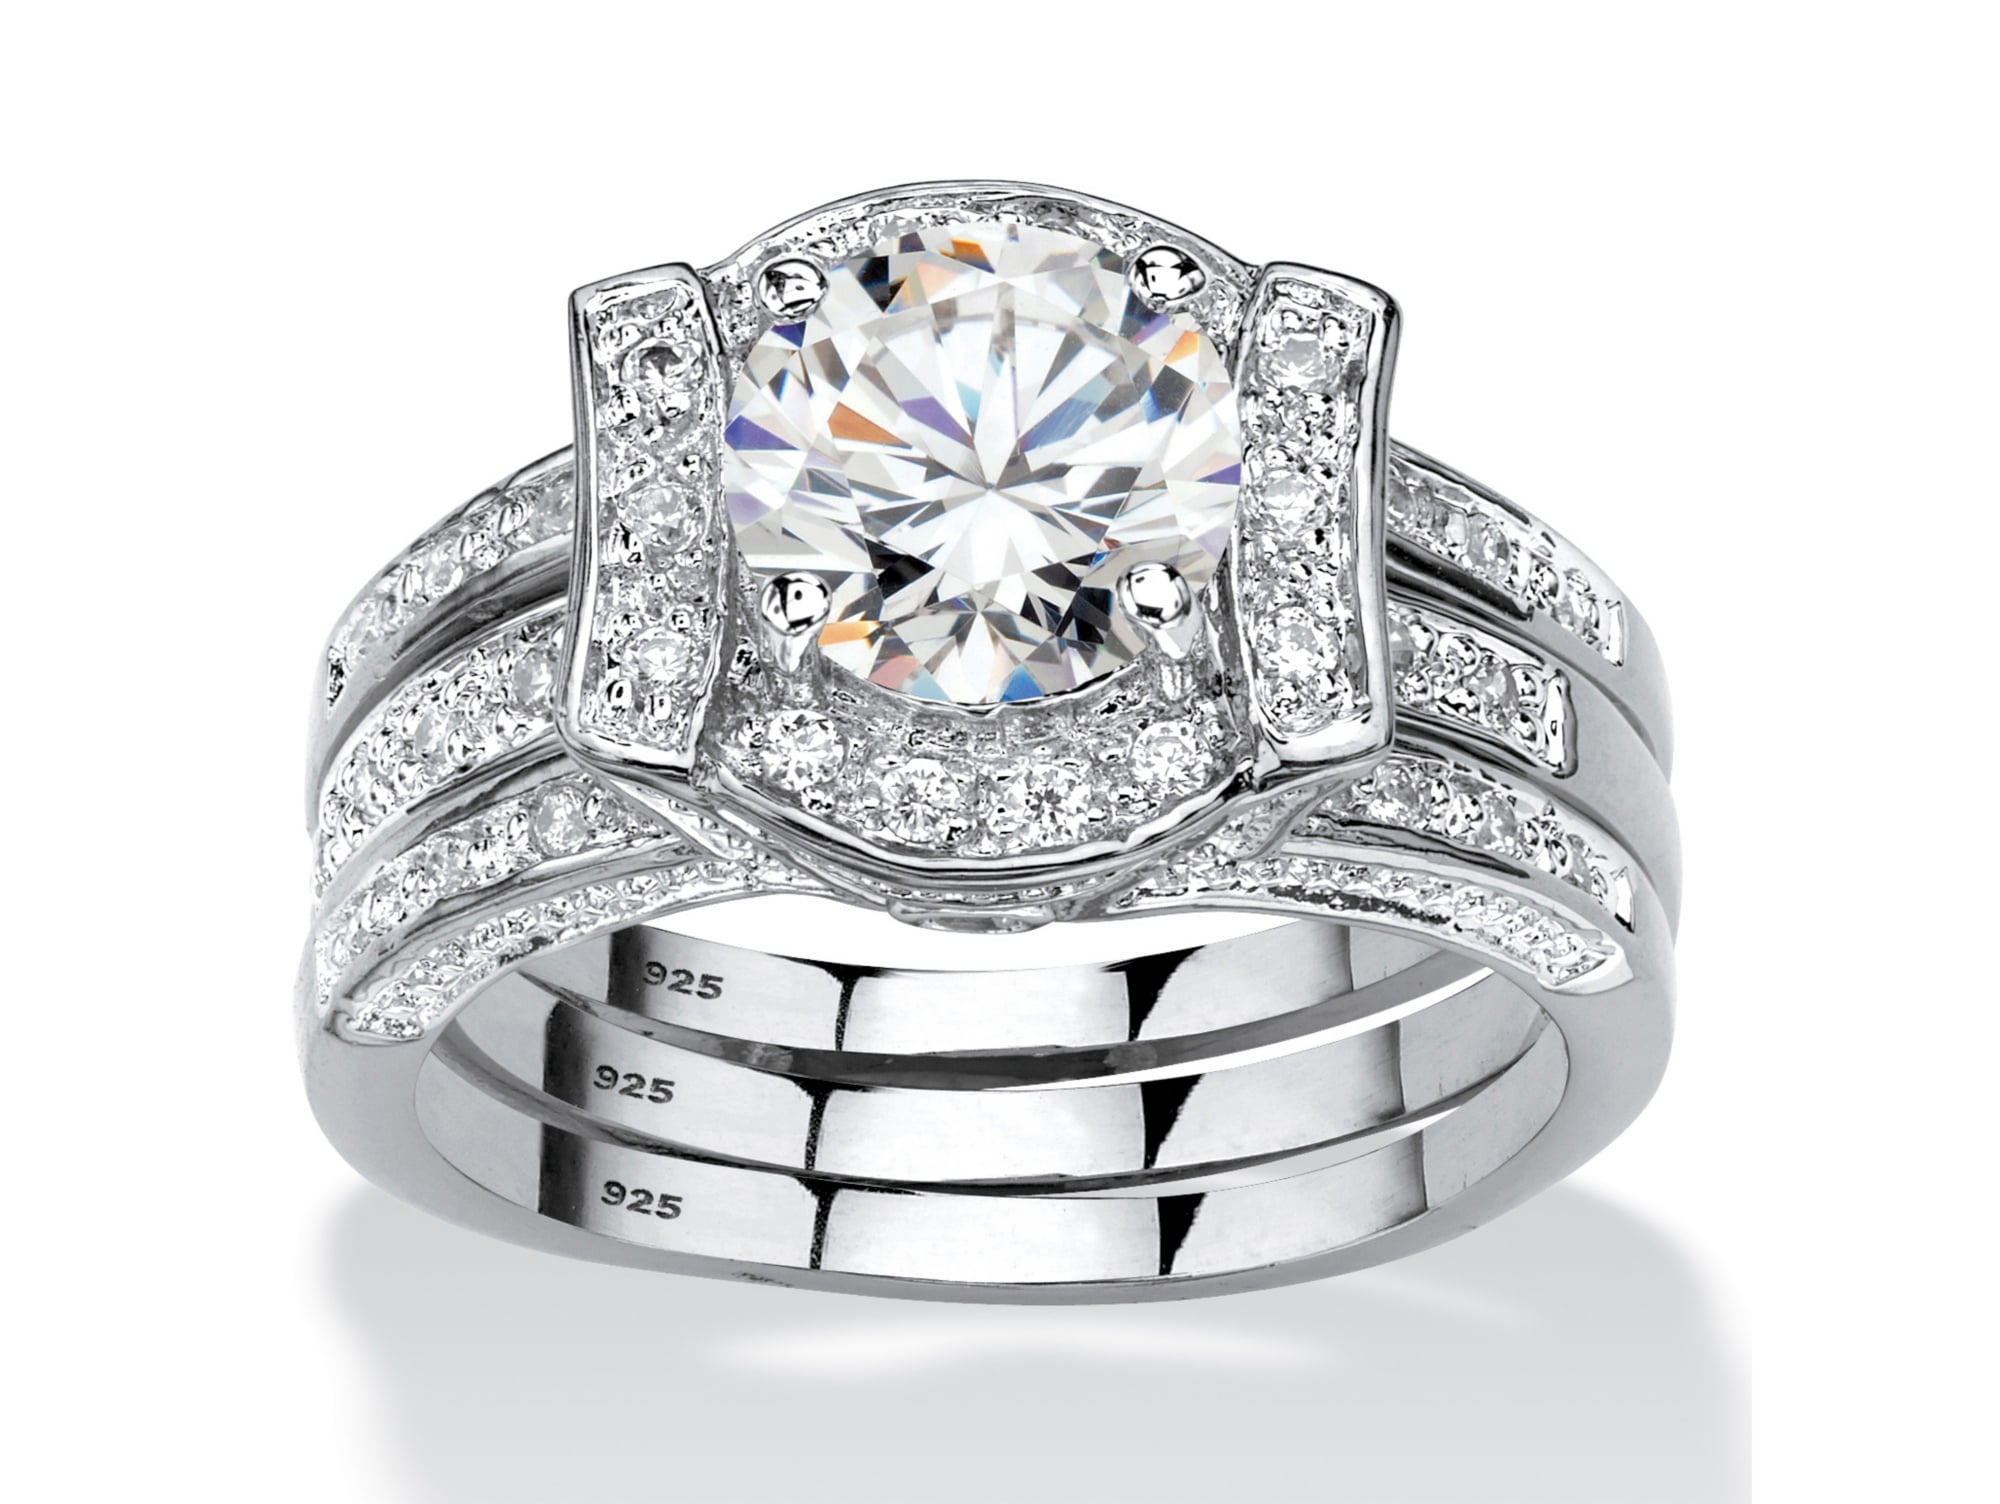 TTstyle 18K WGP Engagement Wedding Ring With 7mm Main Cubic Zirconia Stone 